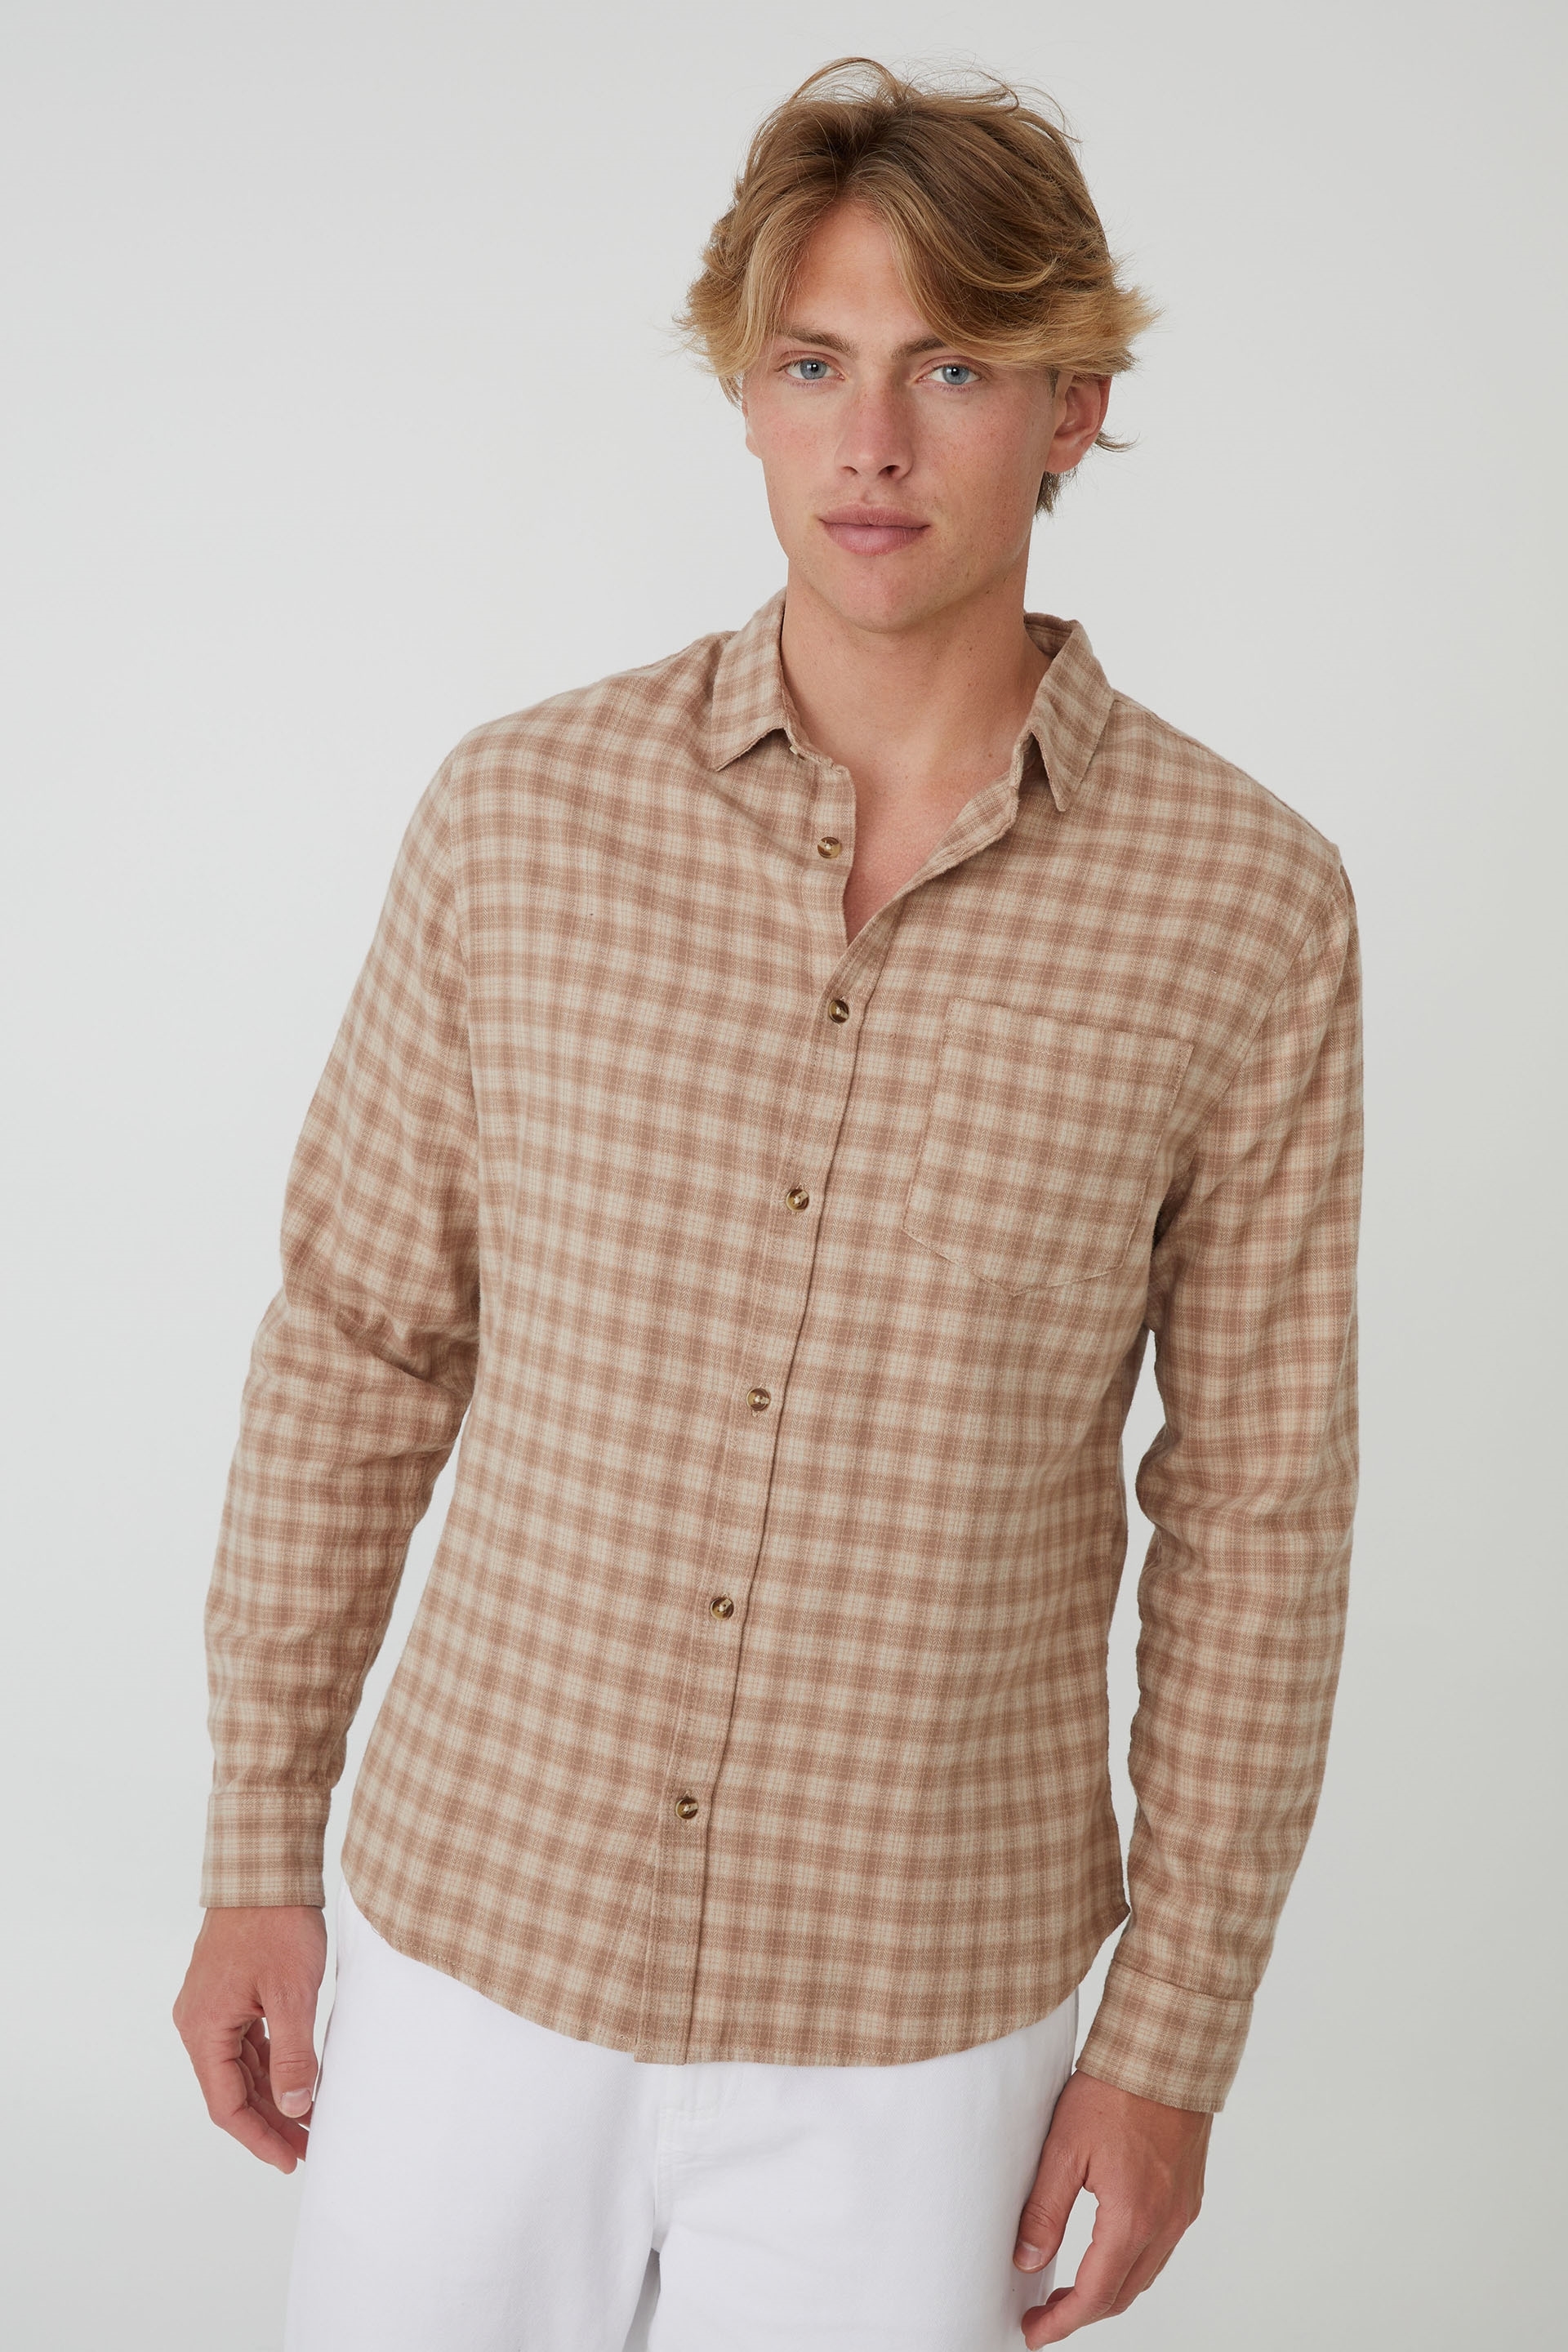 Cotton On Men - Camden Long Sleeve Shirt - Desert check